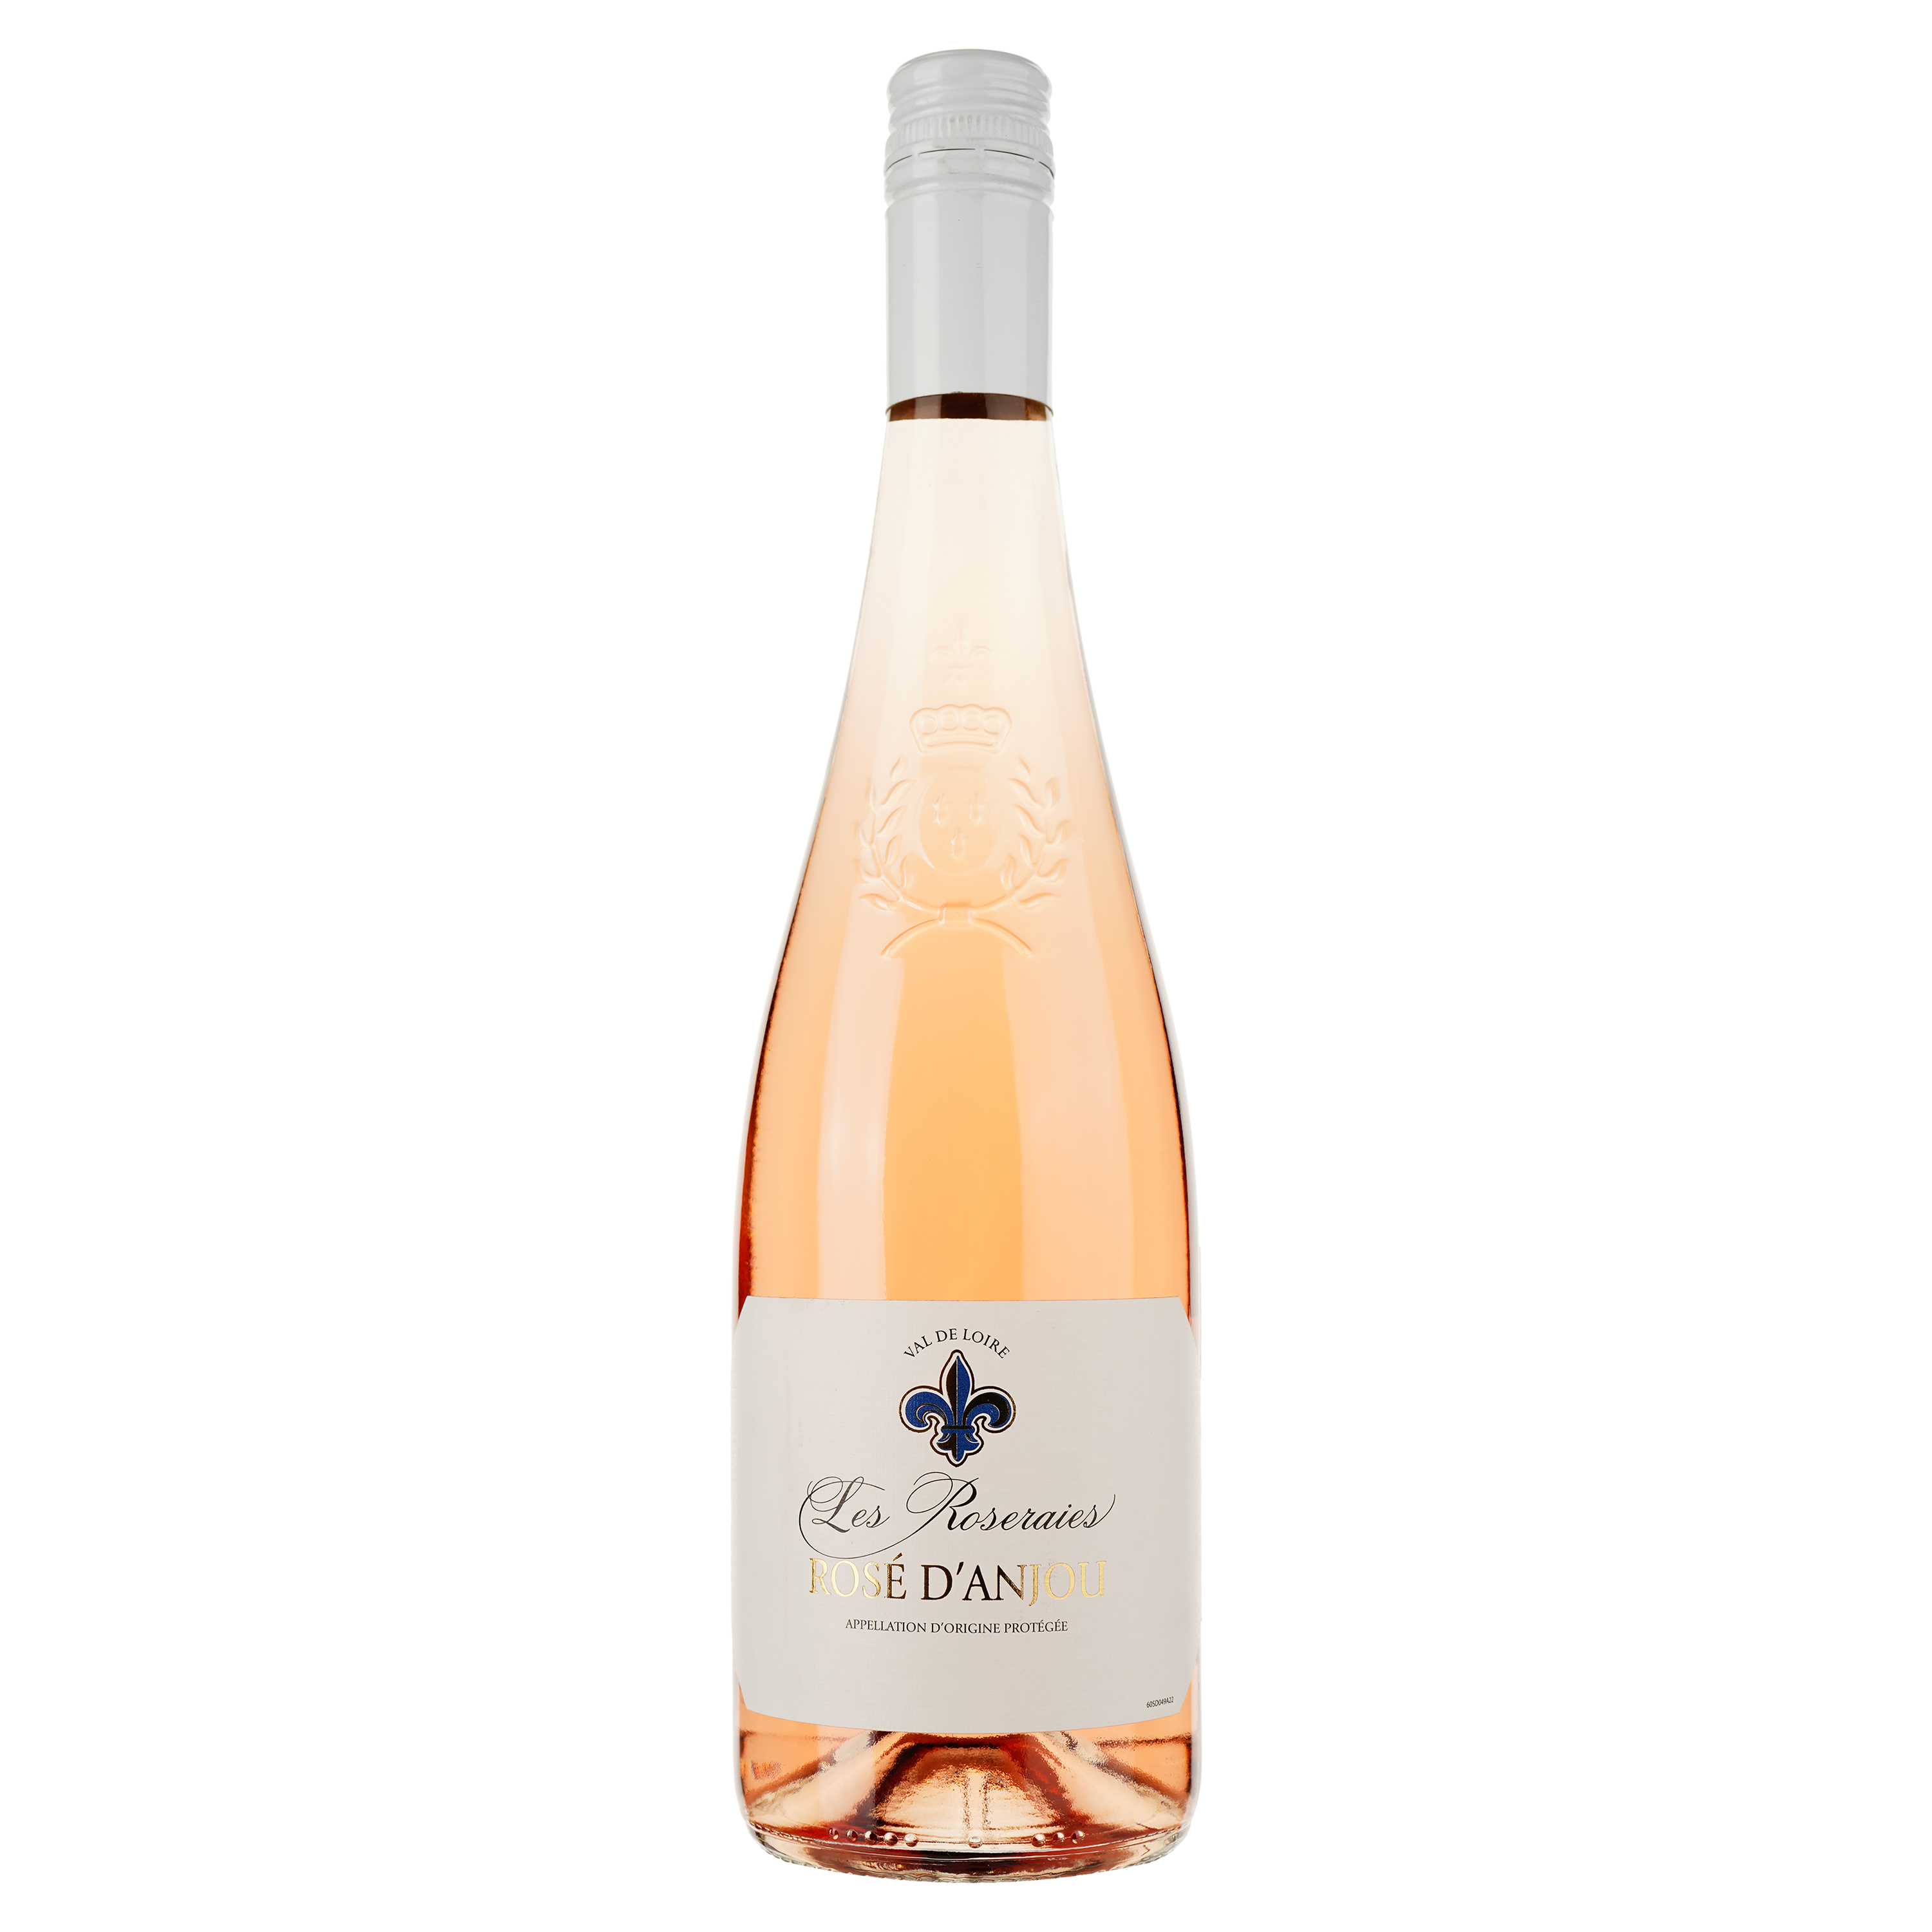 Вино Drouet Freres Les Roseraies Rose d'Anjou, розовое, полусладкое, 0,75 л - фото 1